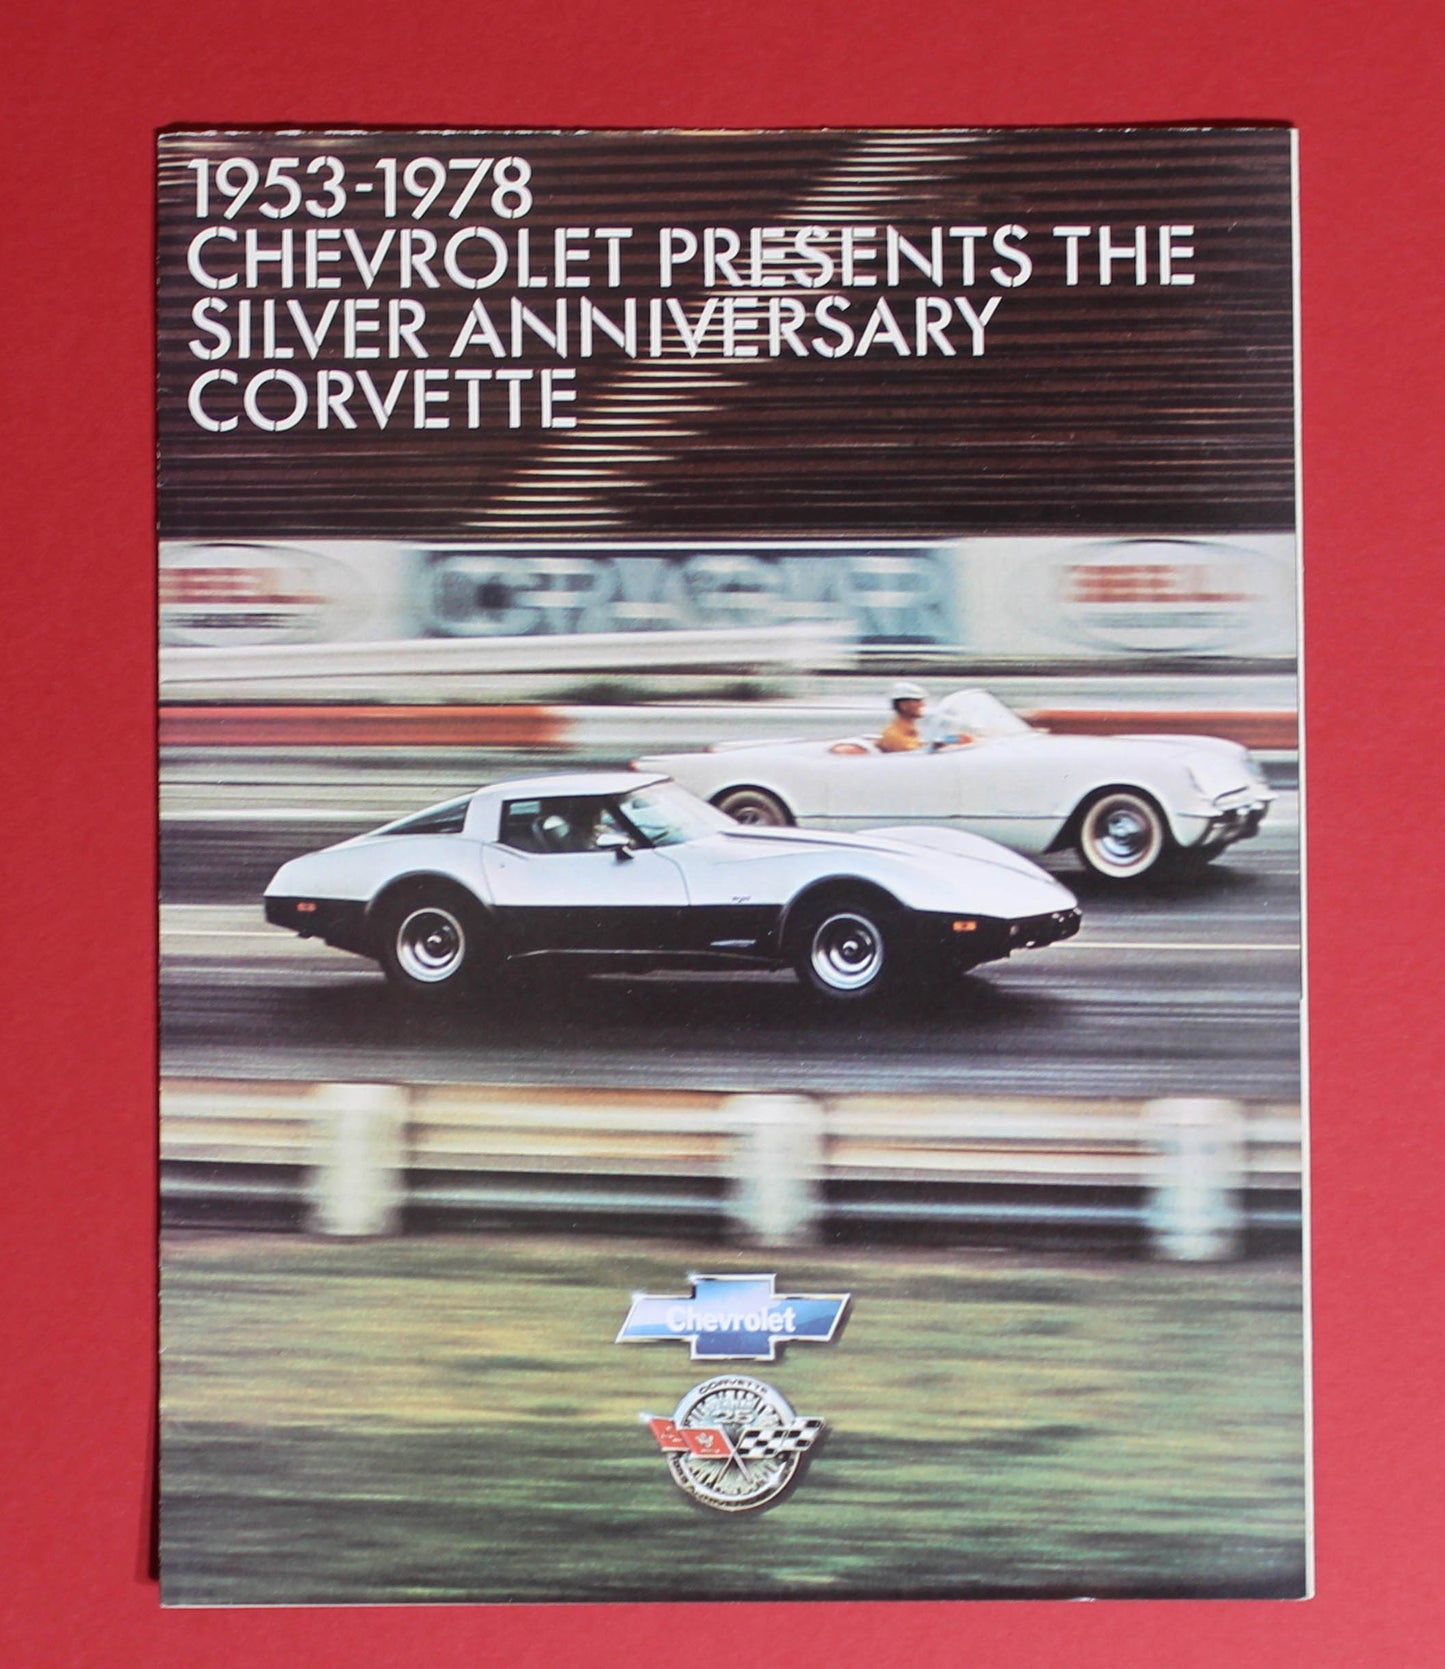 1953-1978 "CHEVROLET PRESENTS THE SILVER ANNIVERSARY CORVETTE" SALES PAMPhLET